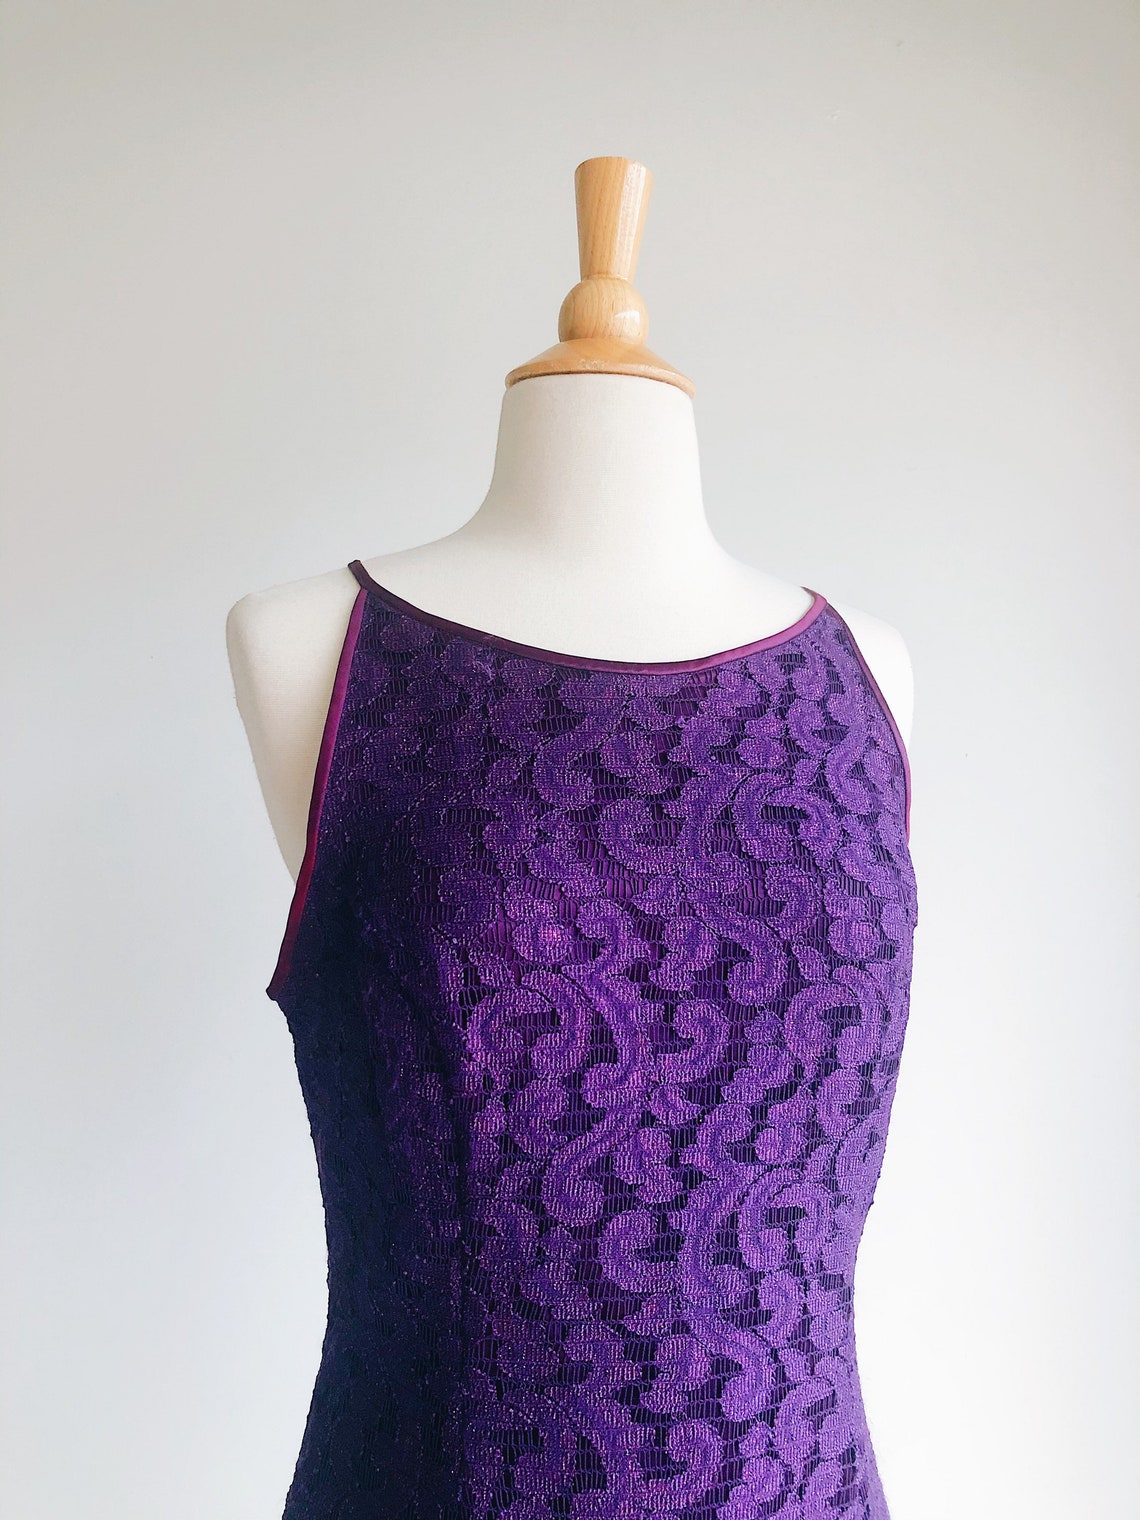 GUNNE SAX Purple Lace Vintage 90's Formal Dress size | Etsy